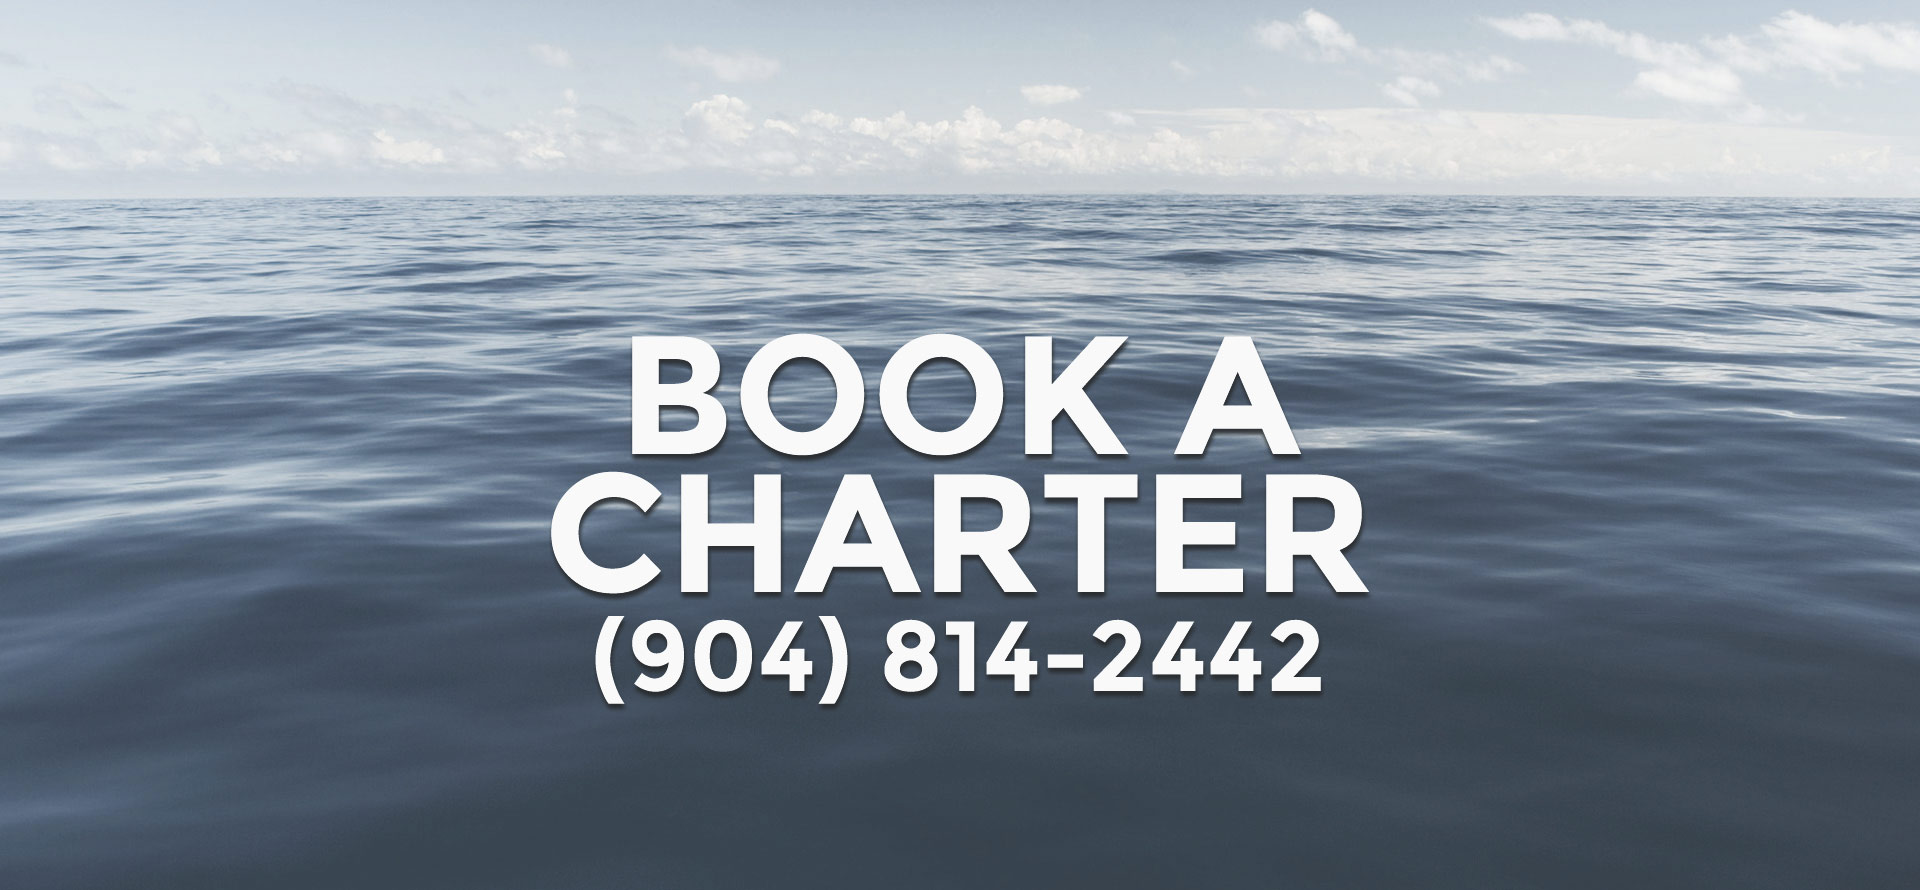 J HOOK Luxury Fishing ChartersBook a Charter - Corporate ...